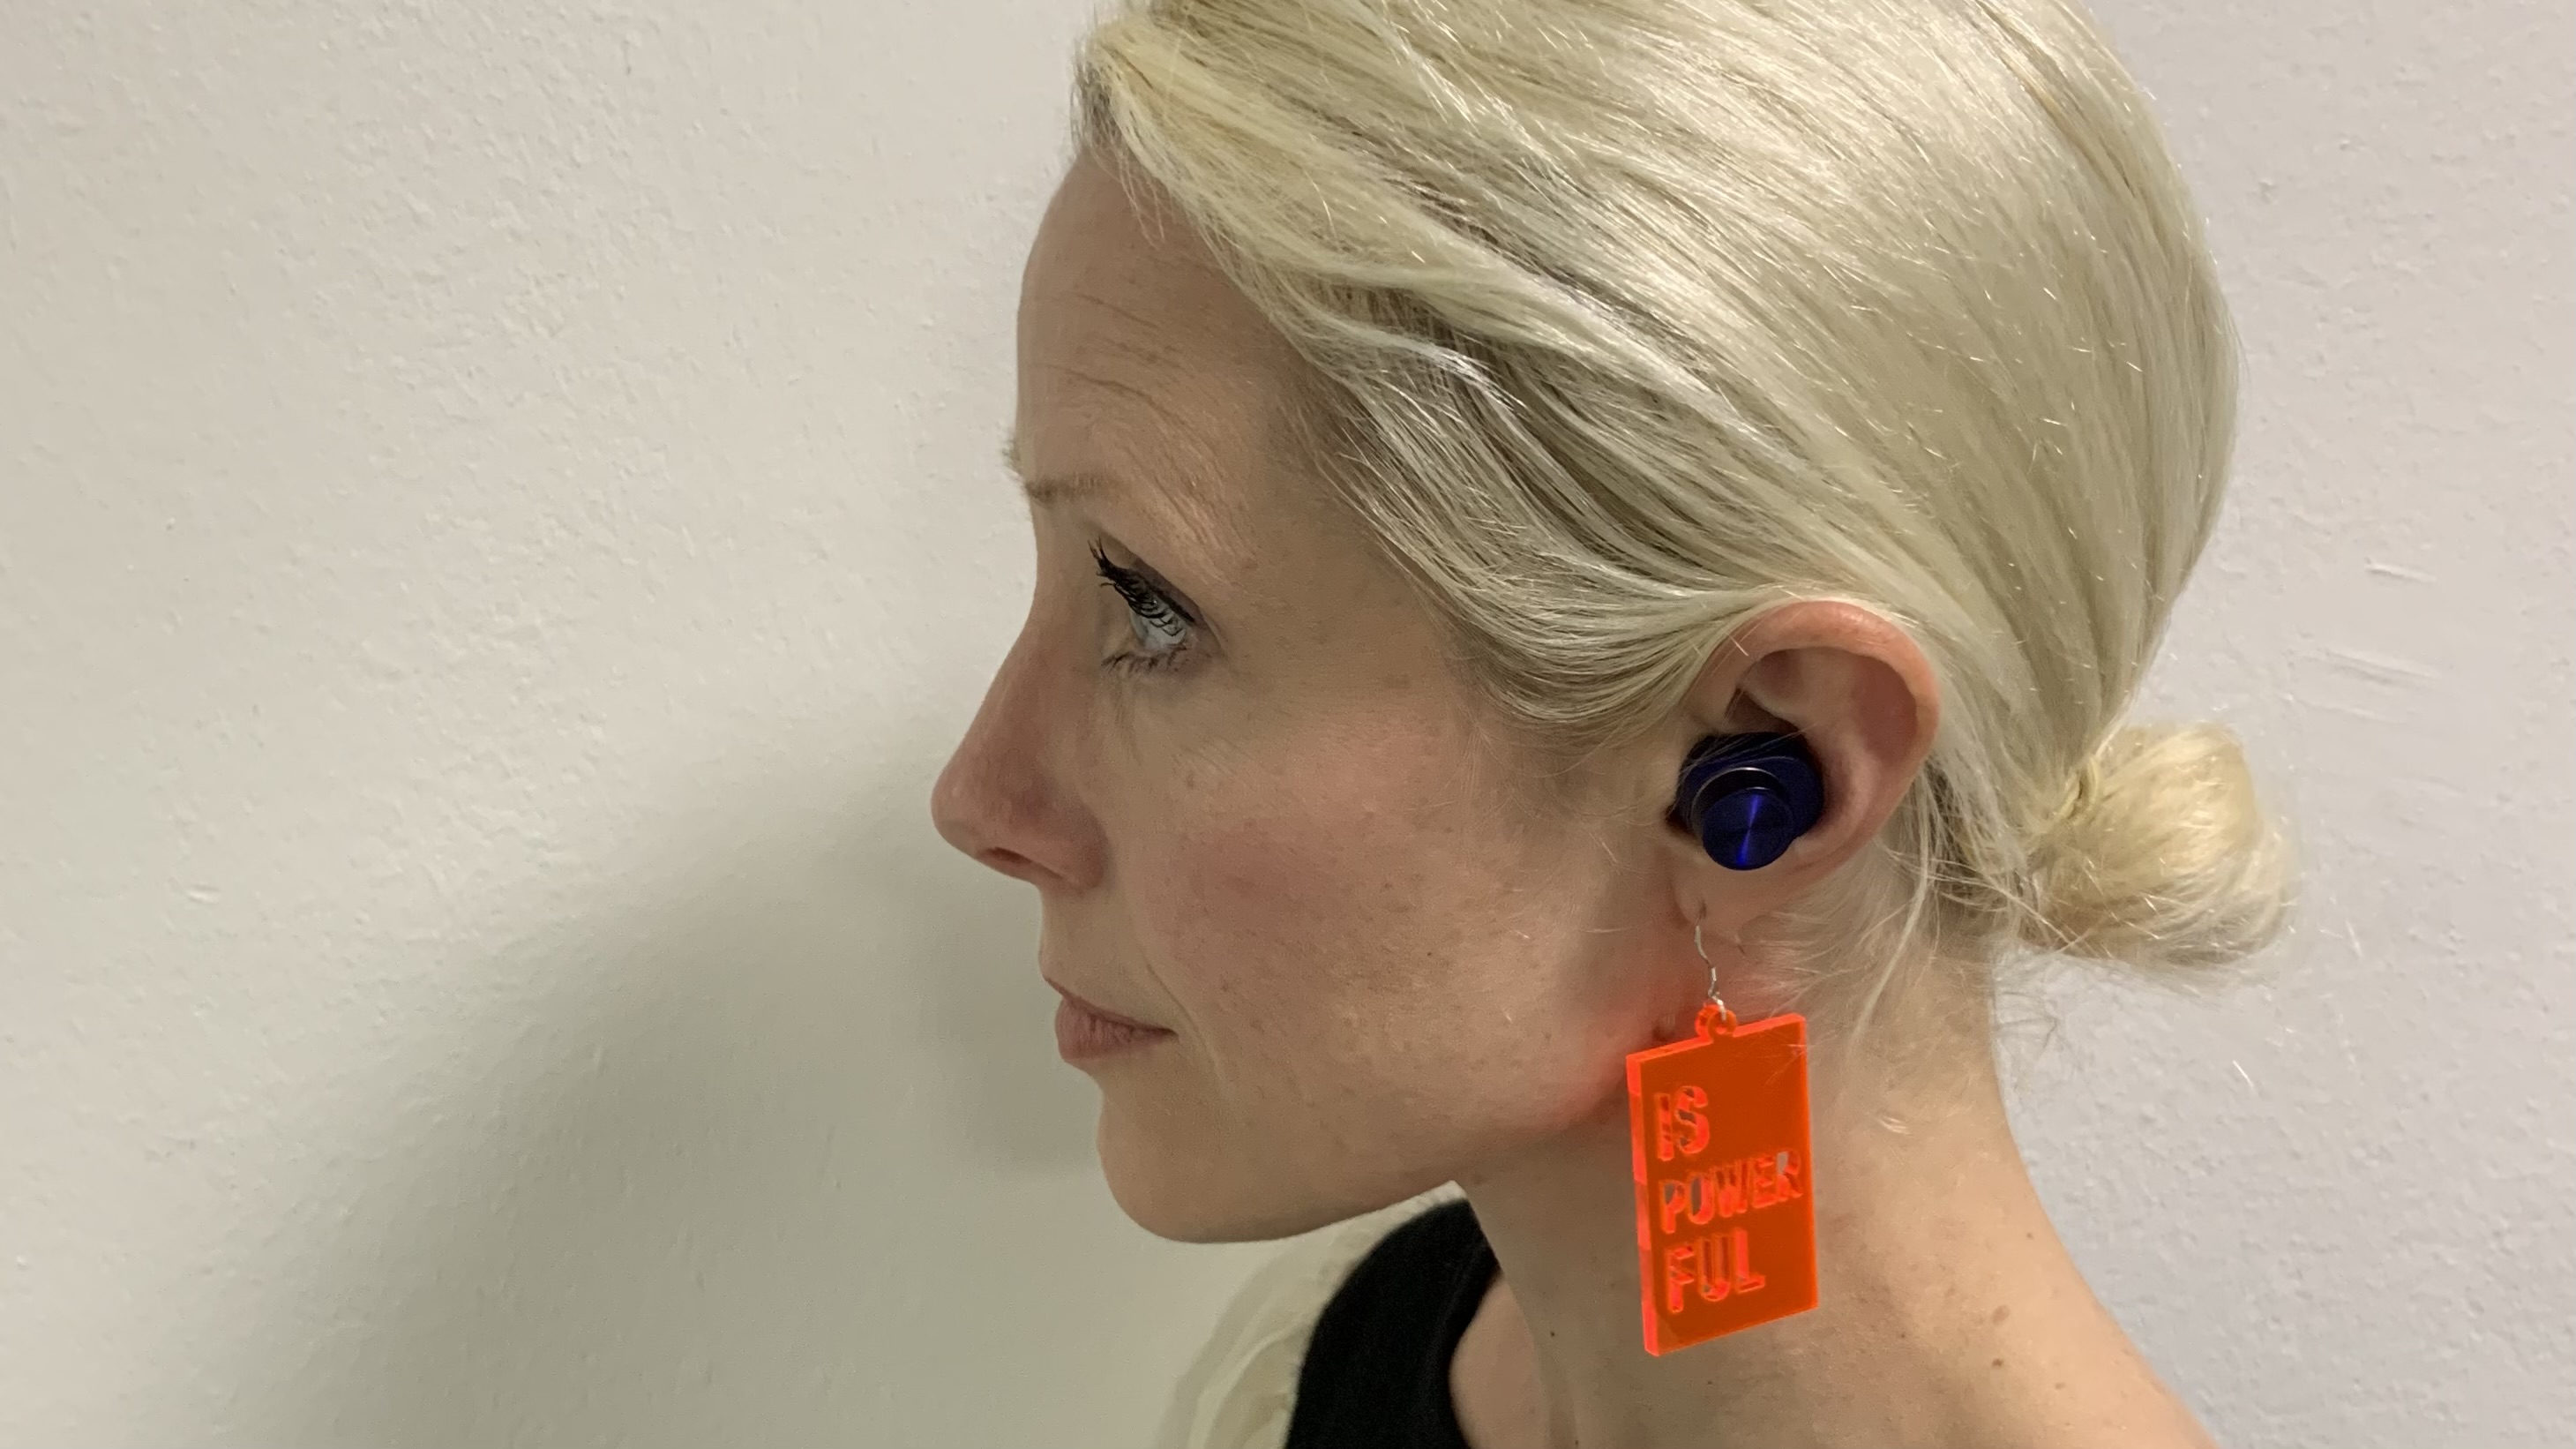 Pi7 S2 earbuds worn by TechRadar's Becky Scarrott, on white background